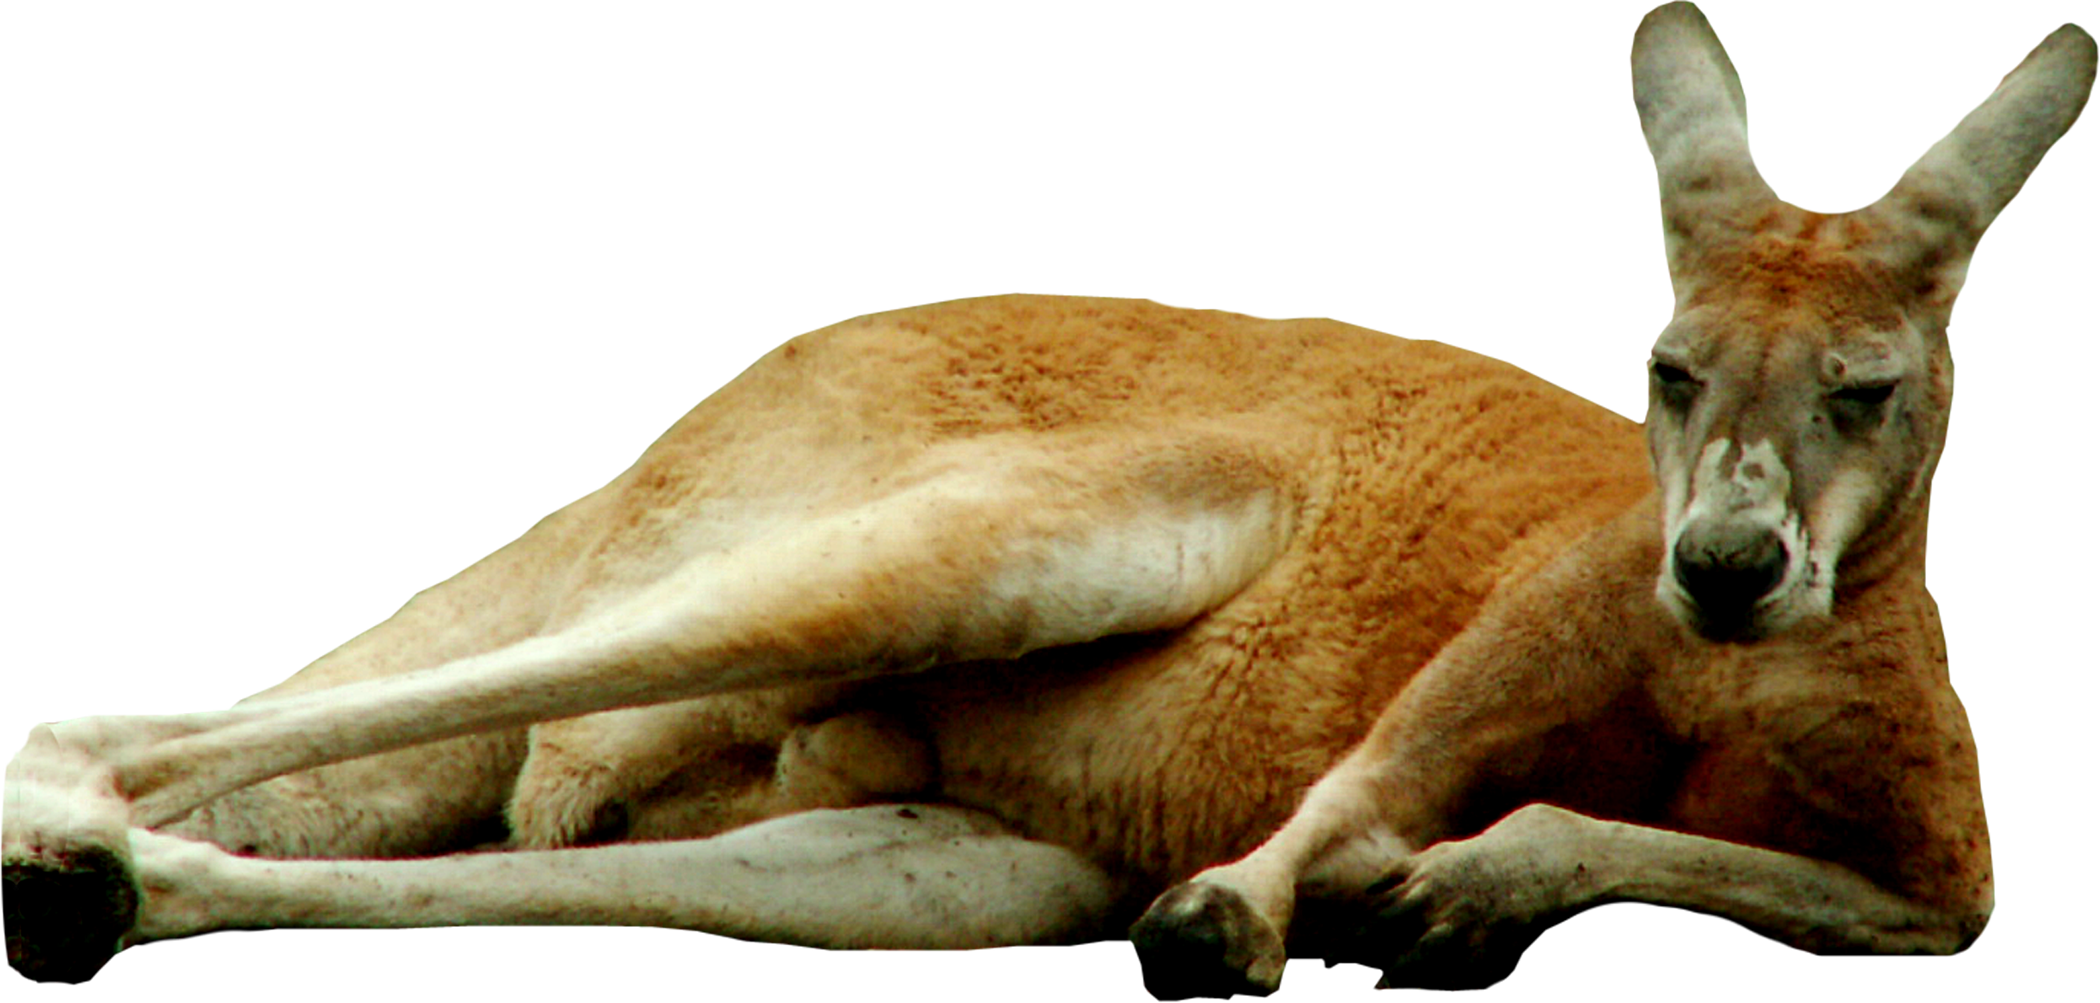 Kangaroo Png Transparent Image Background